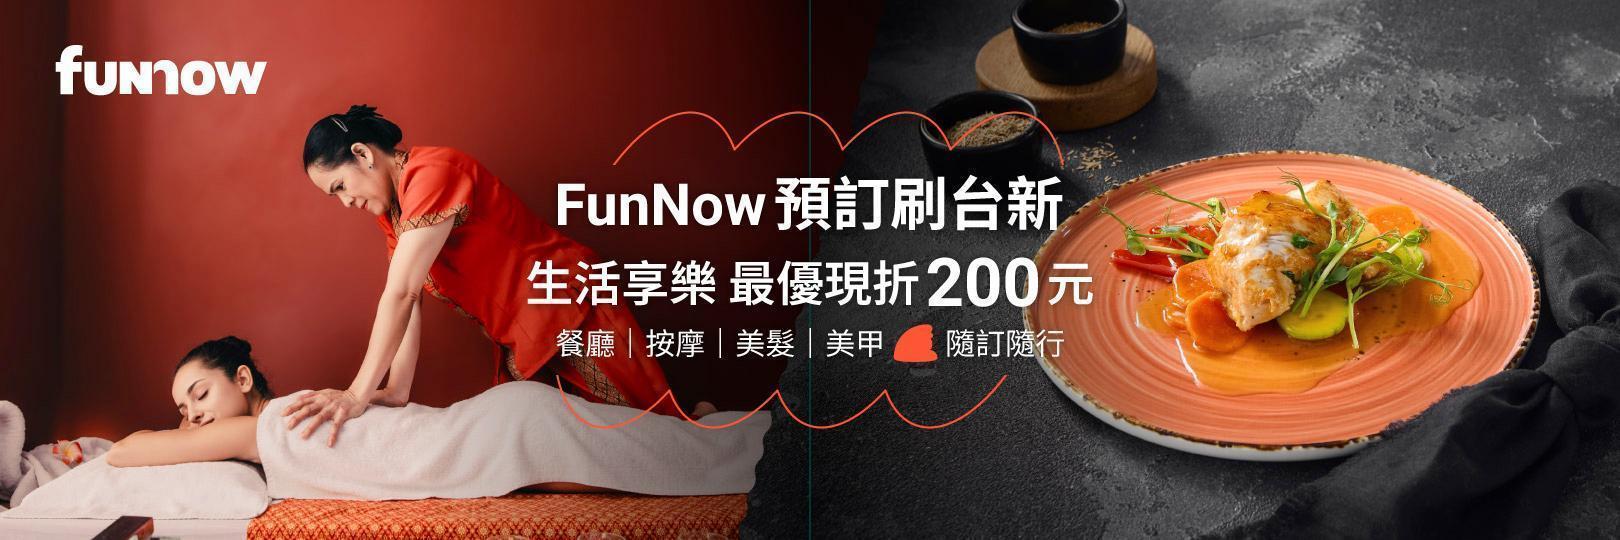 FunNow預訂刷台新 生活享樂最優現折200元